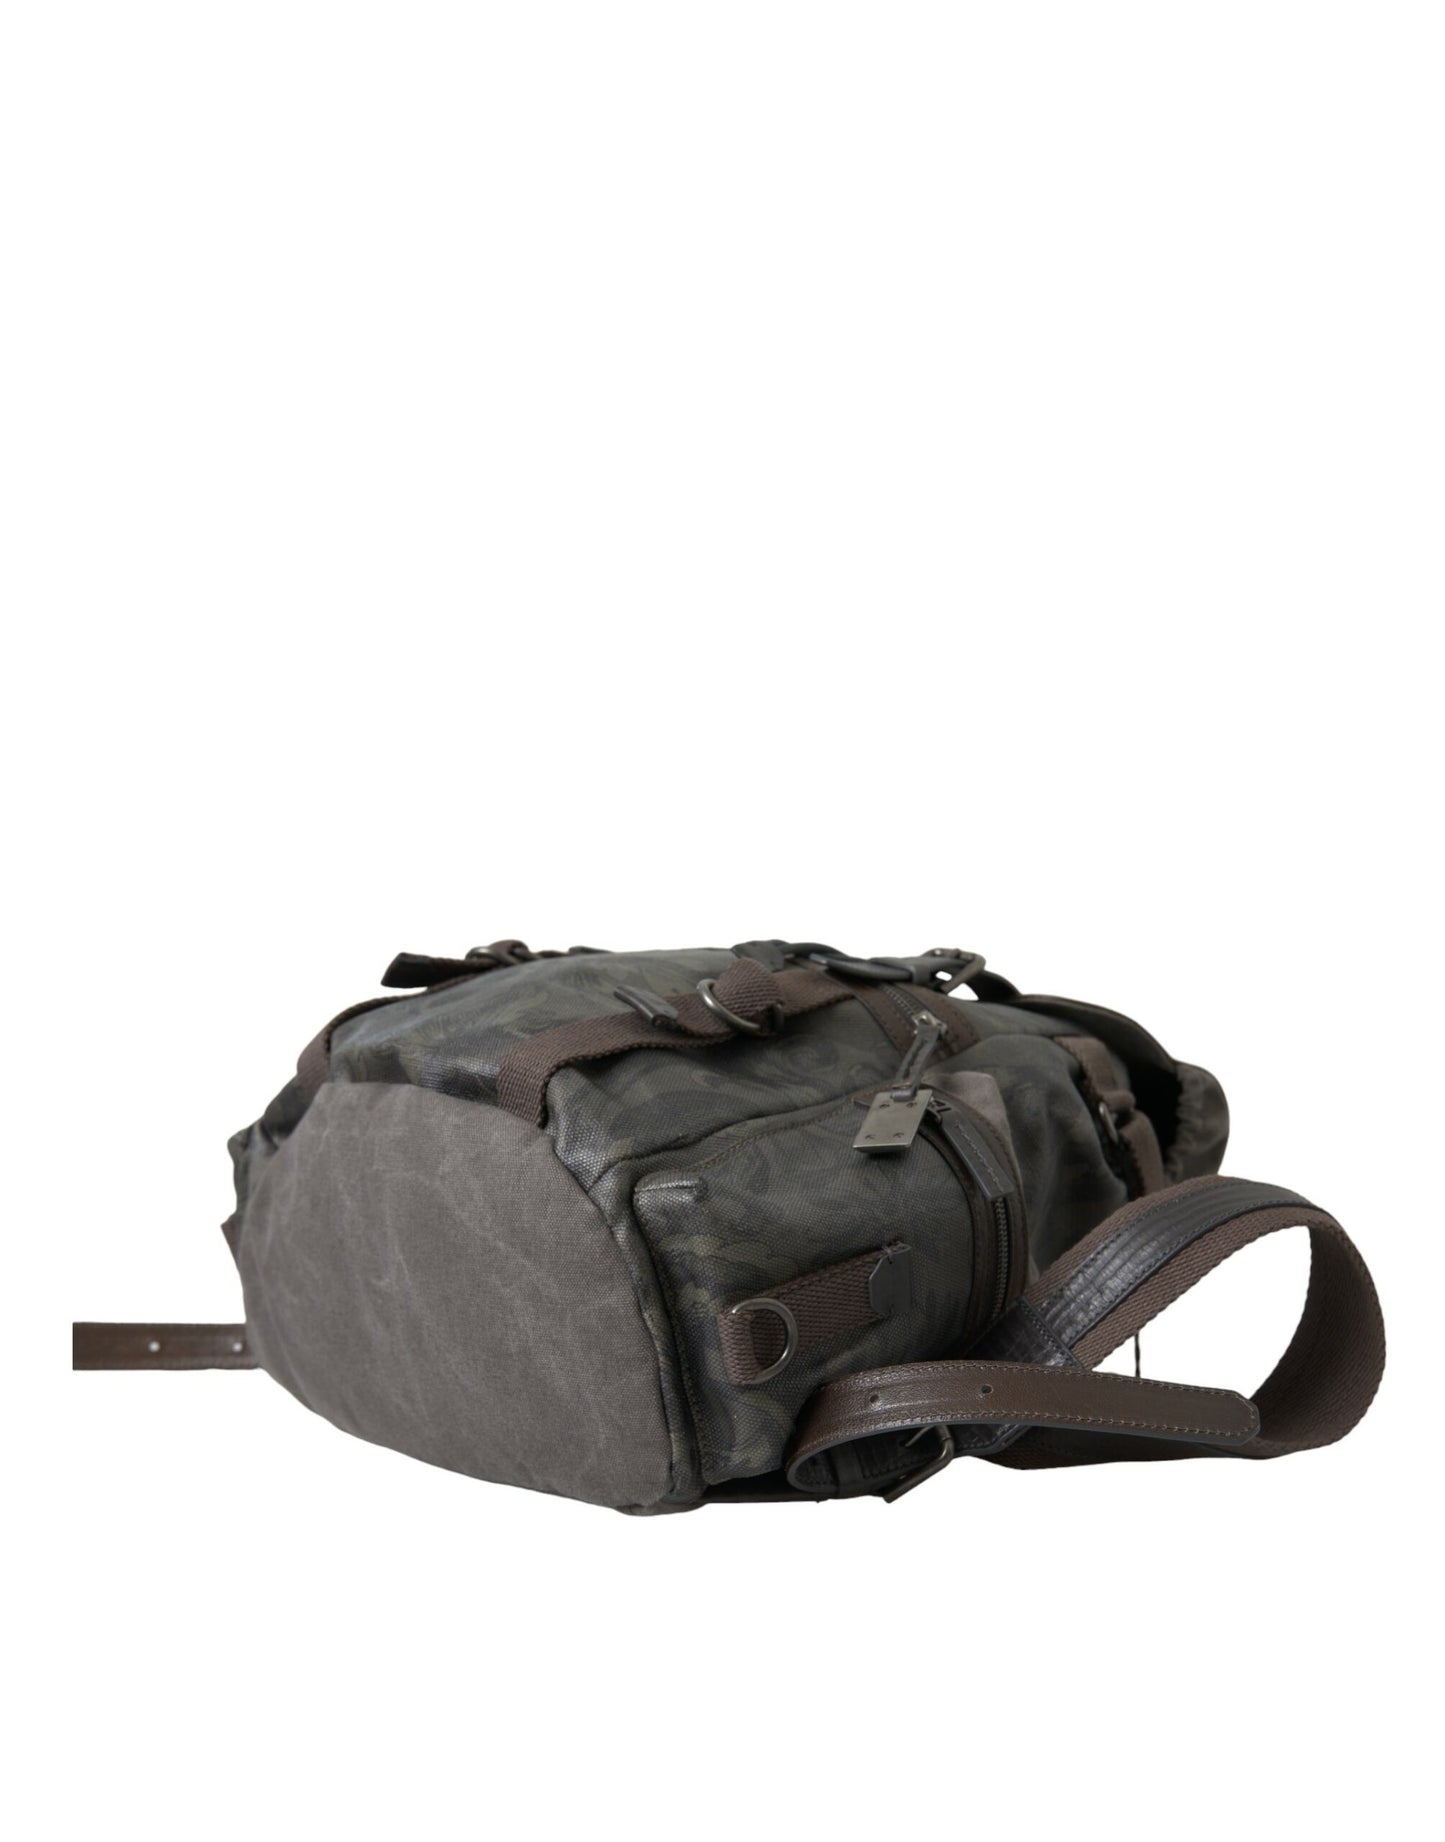 Green Brown Baroque Canvas Leather Rucksack Backpack Bag